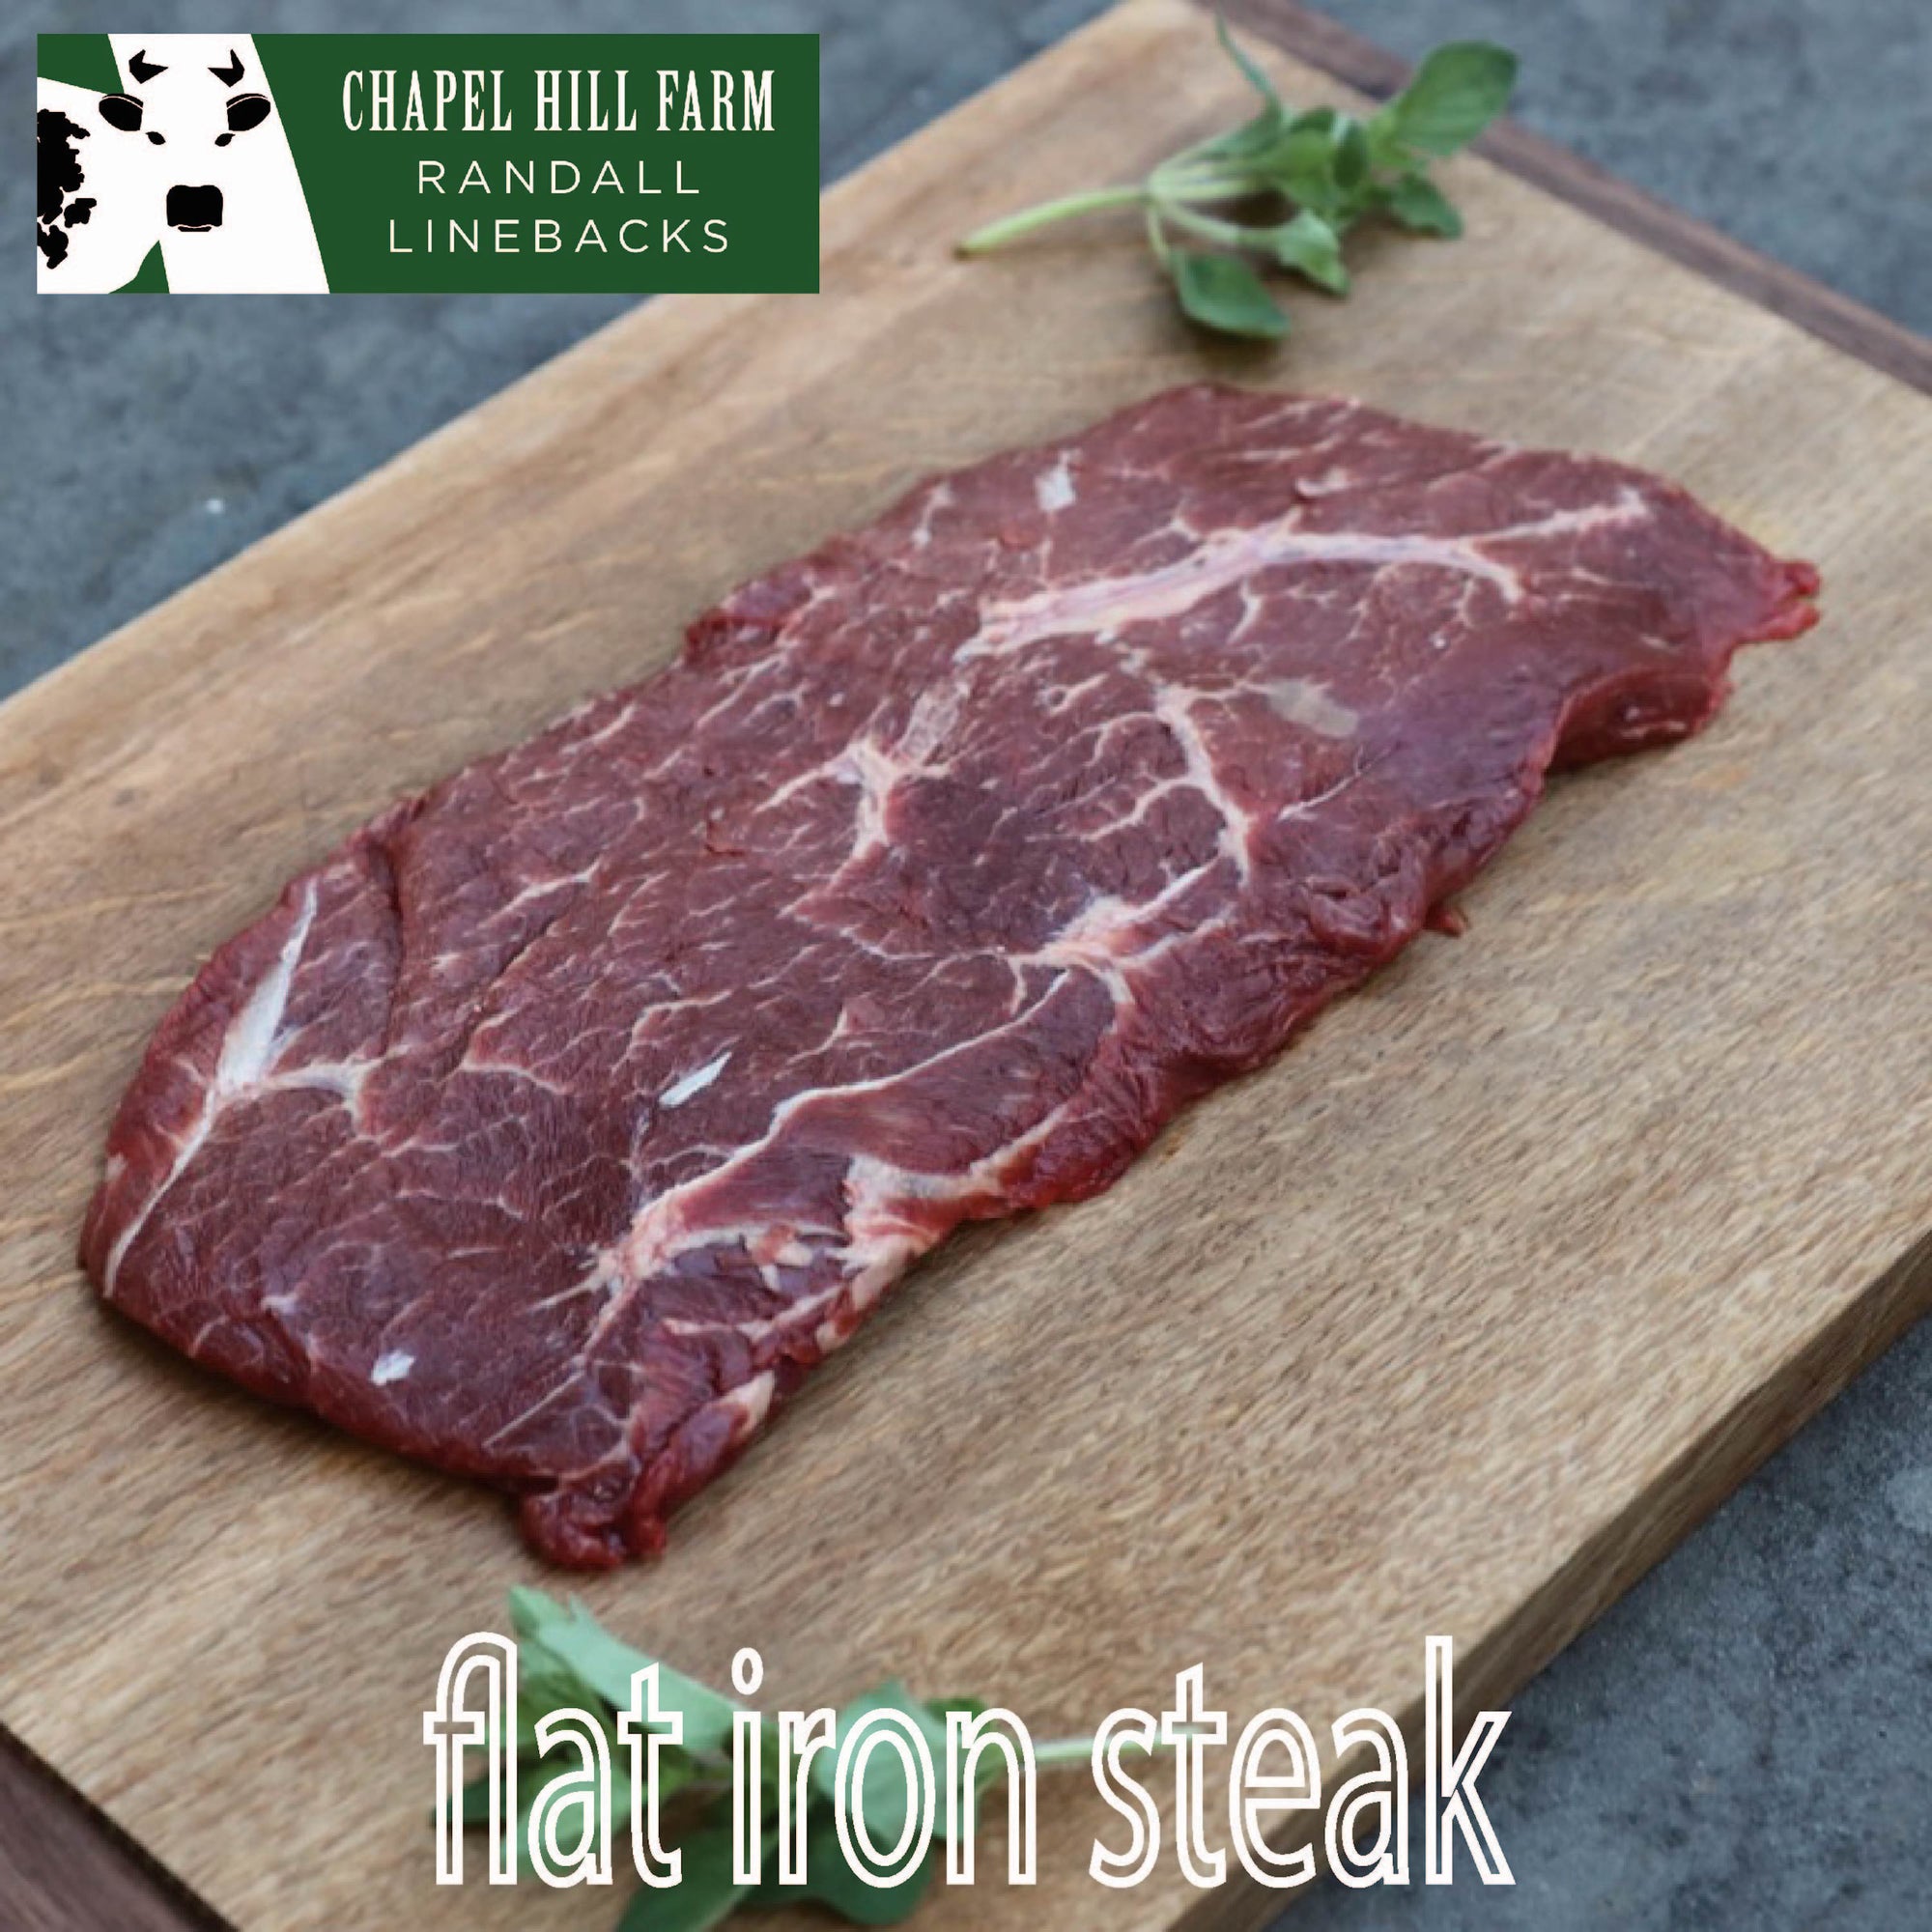 Randall Lineback Flat Iron Steak